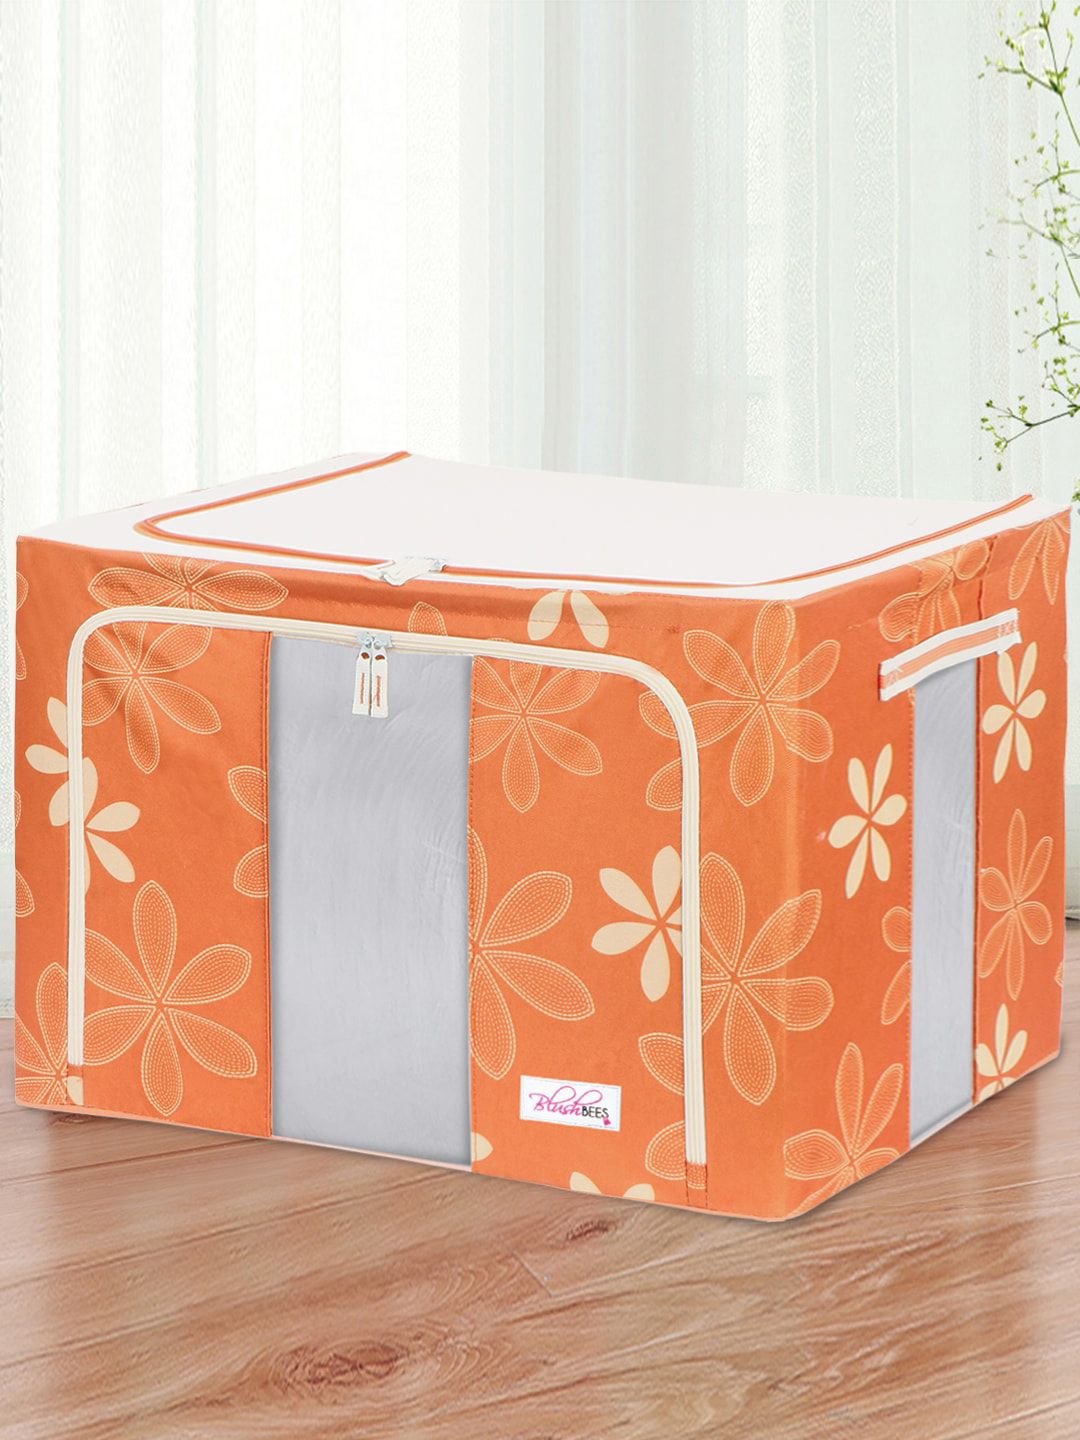 BlushBees Orange & Cream-Color Printed Multi-Utility Wardrobe Organisers Price in India